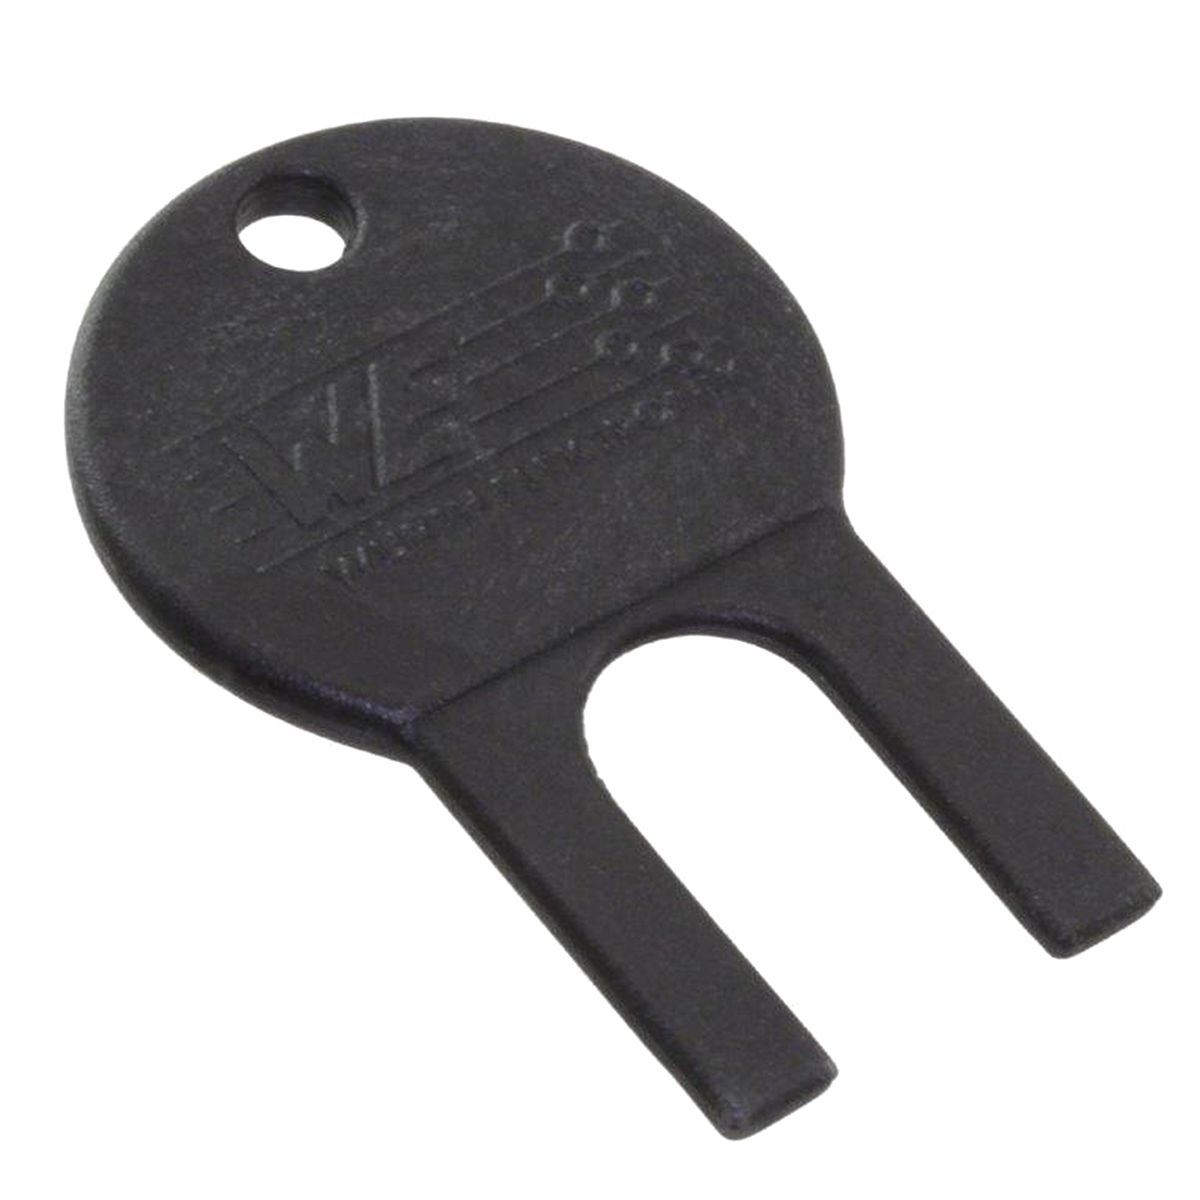 Wurth Elektronik Ferrite Key, 37.5 <font face="symbol">´</font> 1.5mm, For General Application